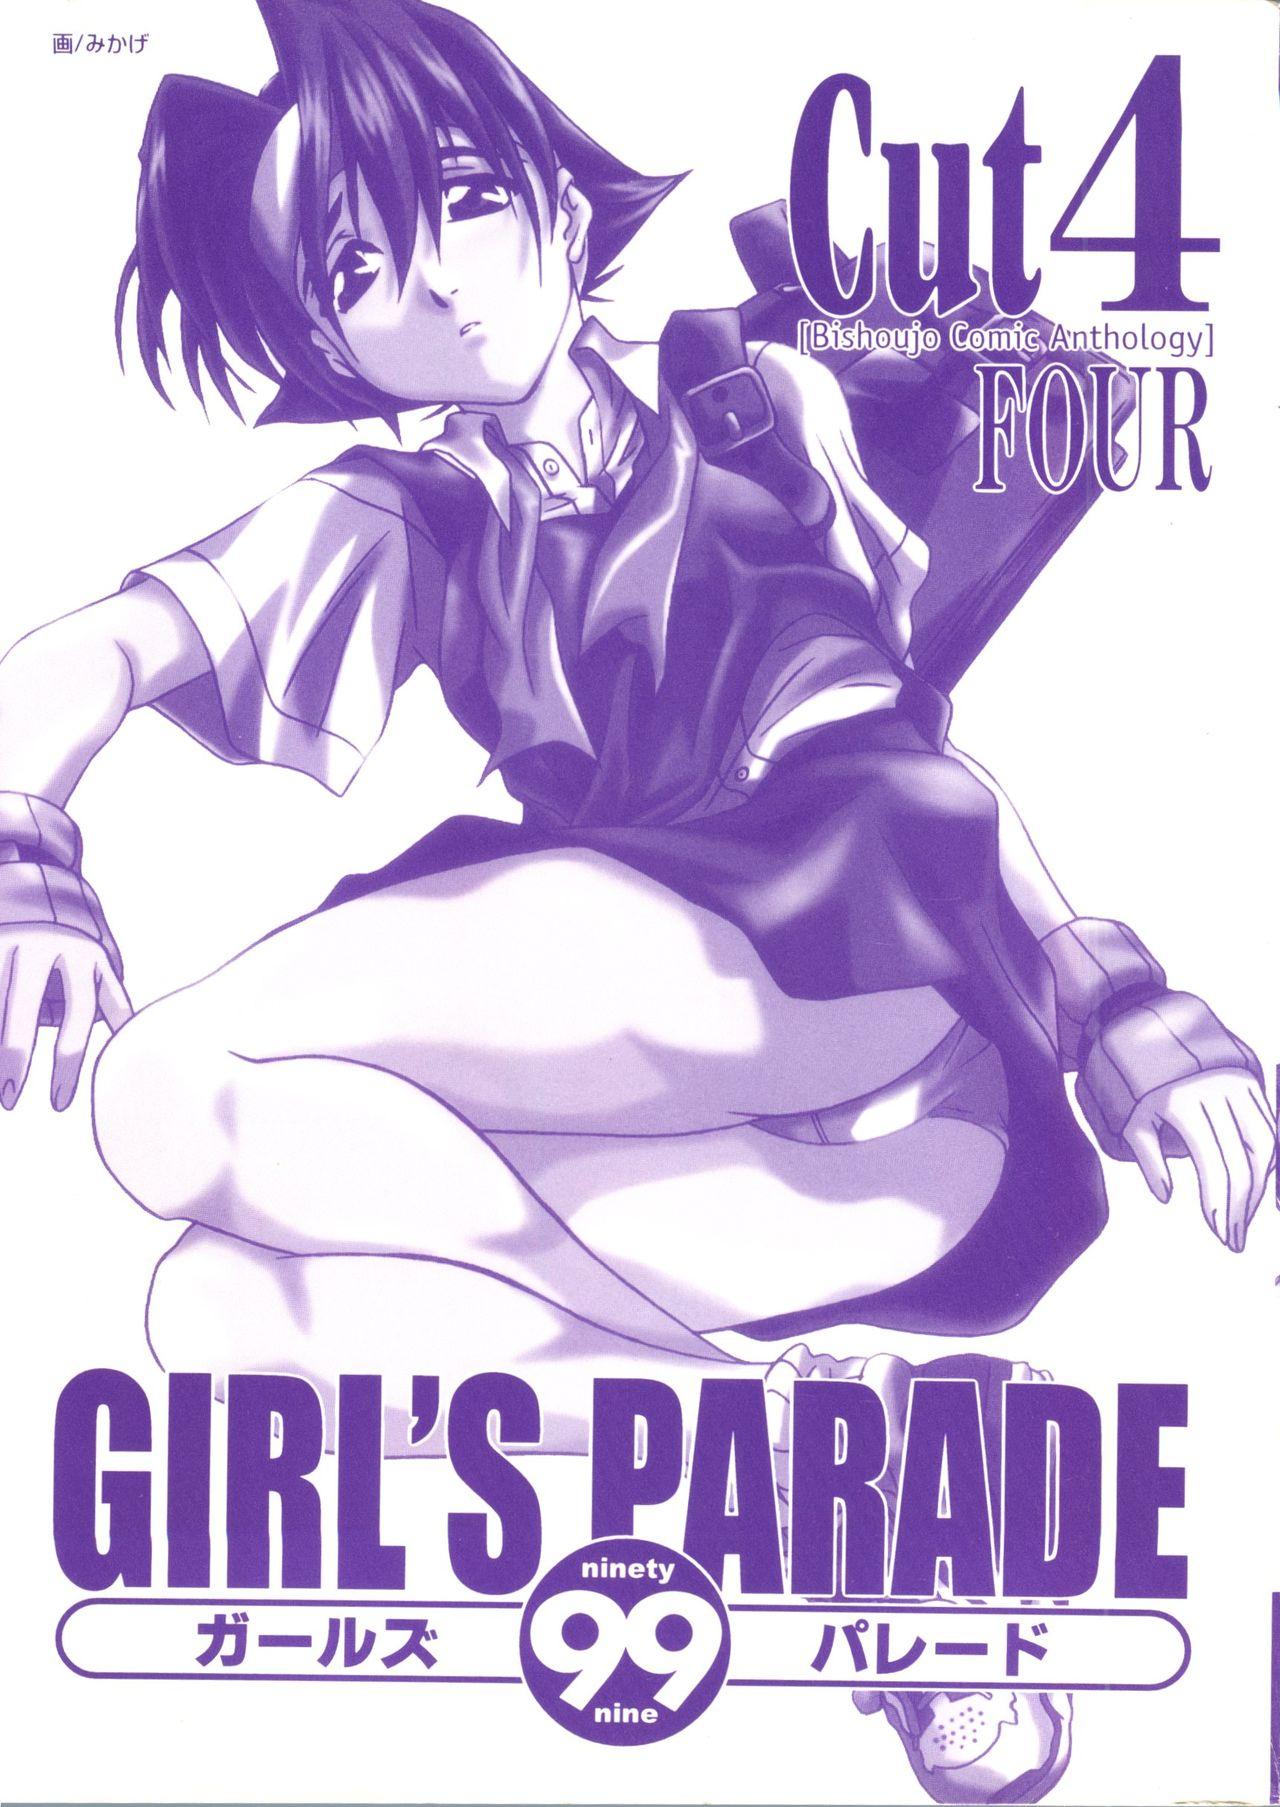 Penetration Girl's Parade 99 Cut 4 - Samurai spirits Rival schools Revolutionary girl utena Star gladiator Brazzers - Page 2